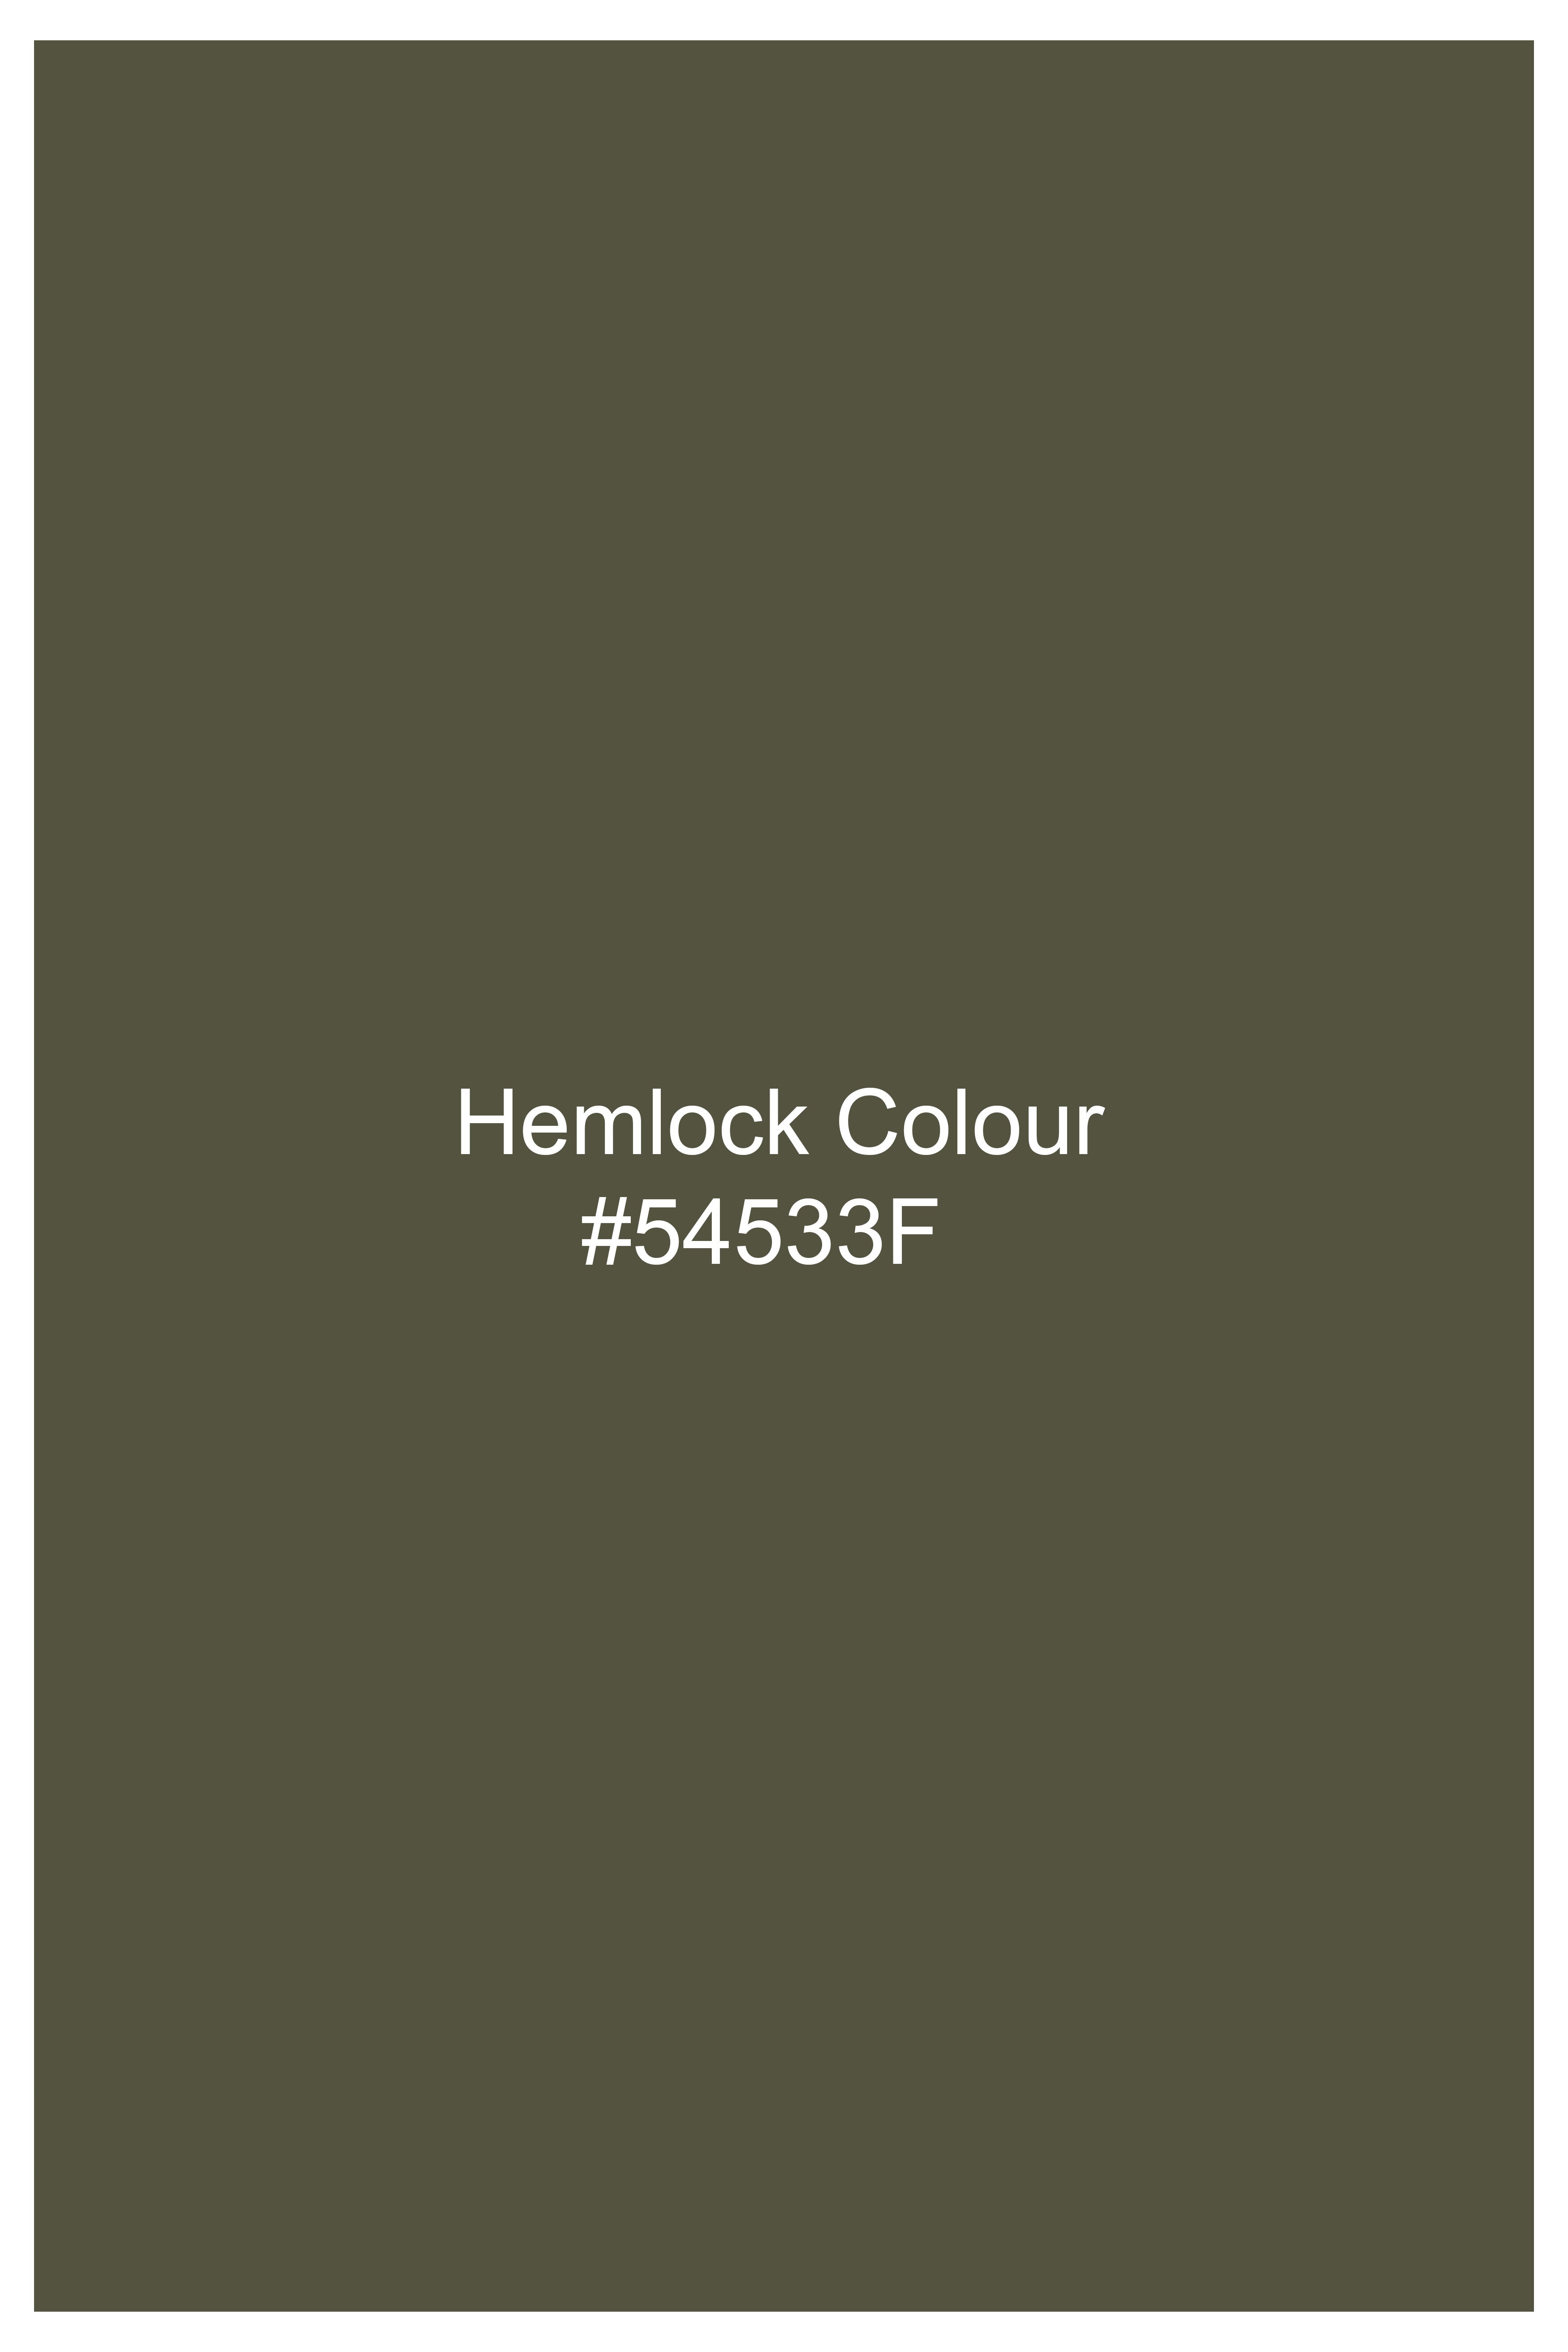 Hemlock Green Premium Cotton Stretchable Traveler Nehru Jacket WC2786-36, WC2786-38, WC2786-40, WC2786-42, WC2786-44, WC2786-46, WC2786-48, WC2786-50, WC2786-52, WC2786-54, WC2786-56, WC2786-58, WC2786-60